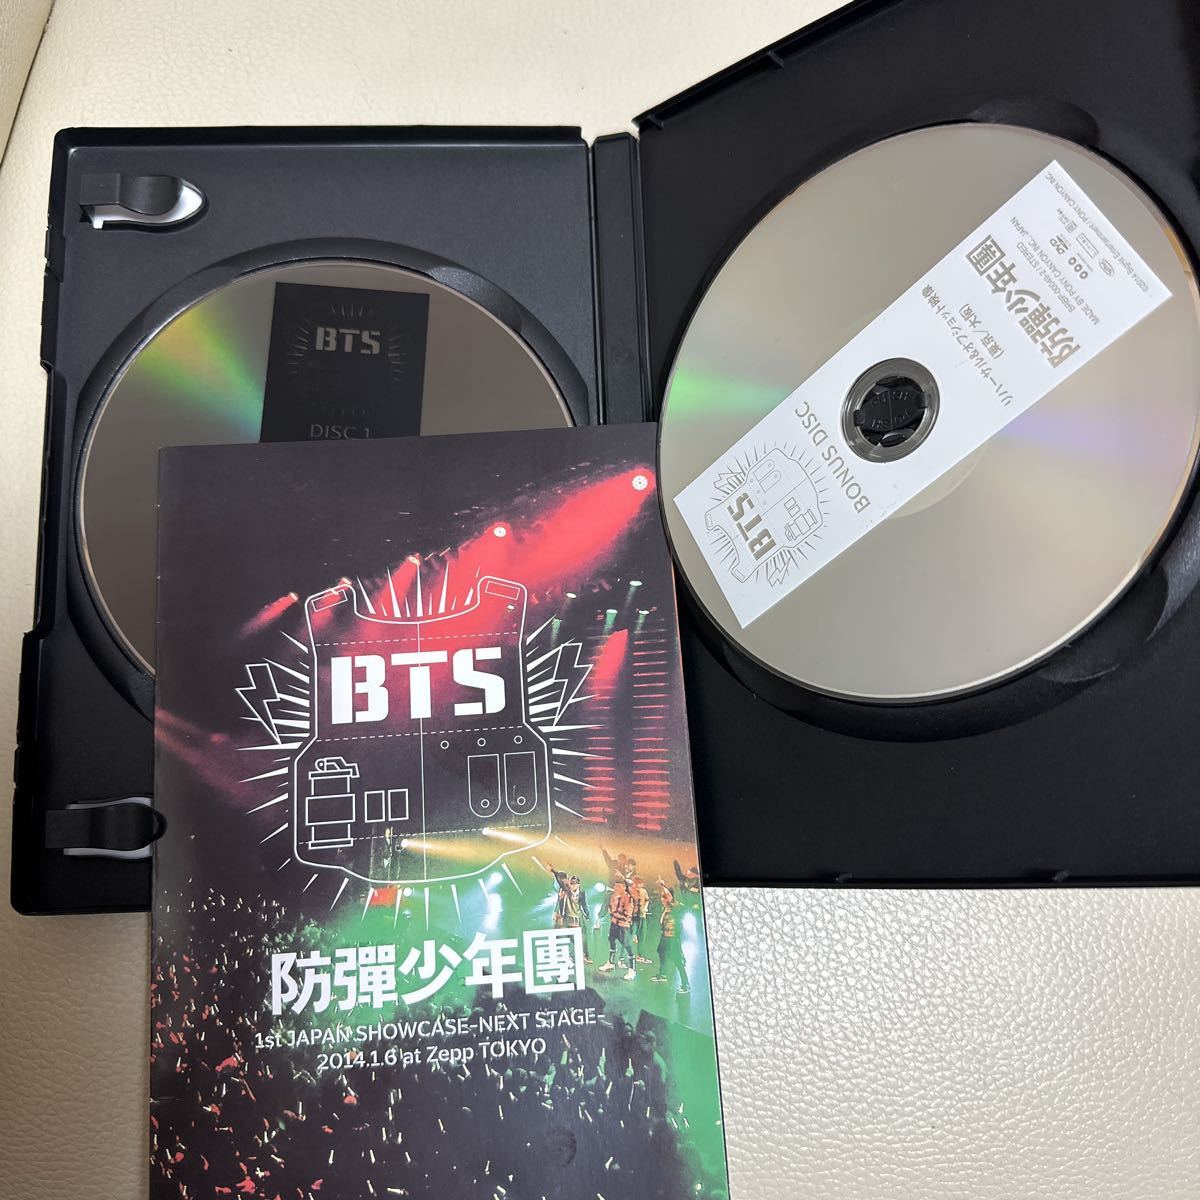 BTS 防弾少年団 1st JAPAN SHOWCASE DVD(中古/送料無料)のヤフオク落札情報